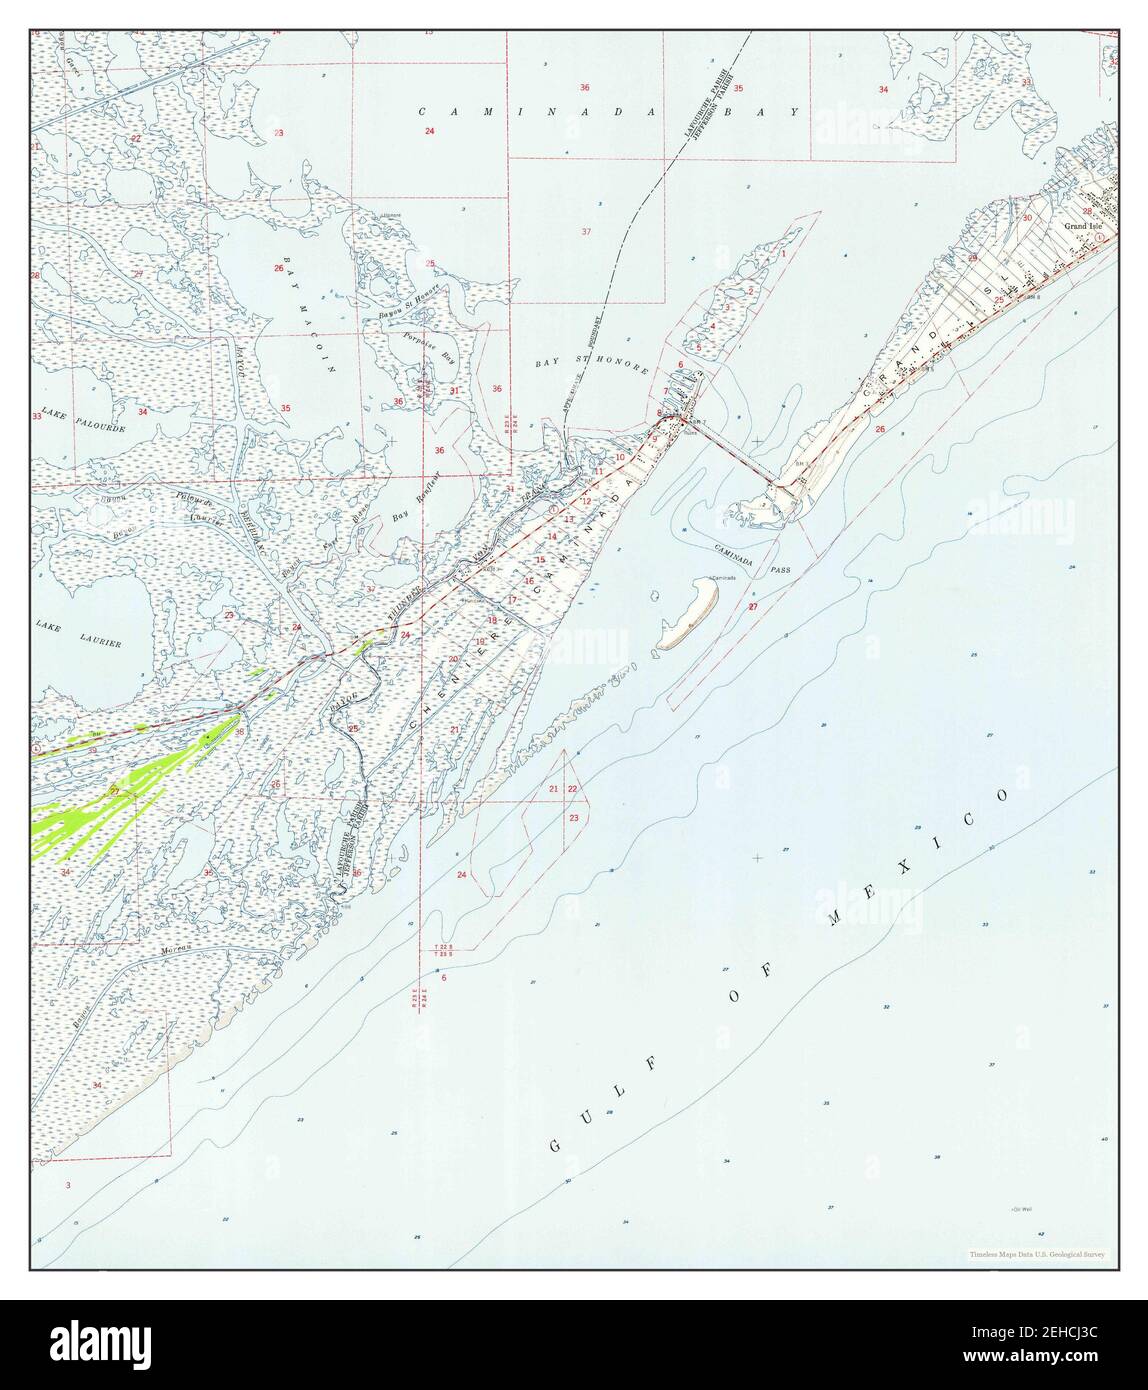 Caminada Pass, Louisiana, map 1957, 1:24000, United States of America by Timeless Maps, data U.S. Geological Survey Stock Photo